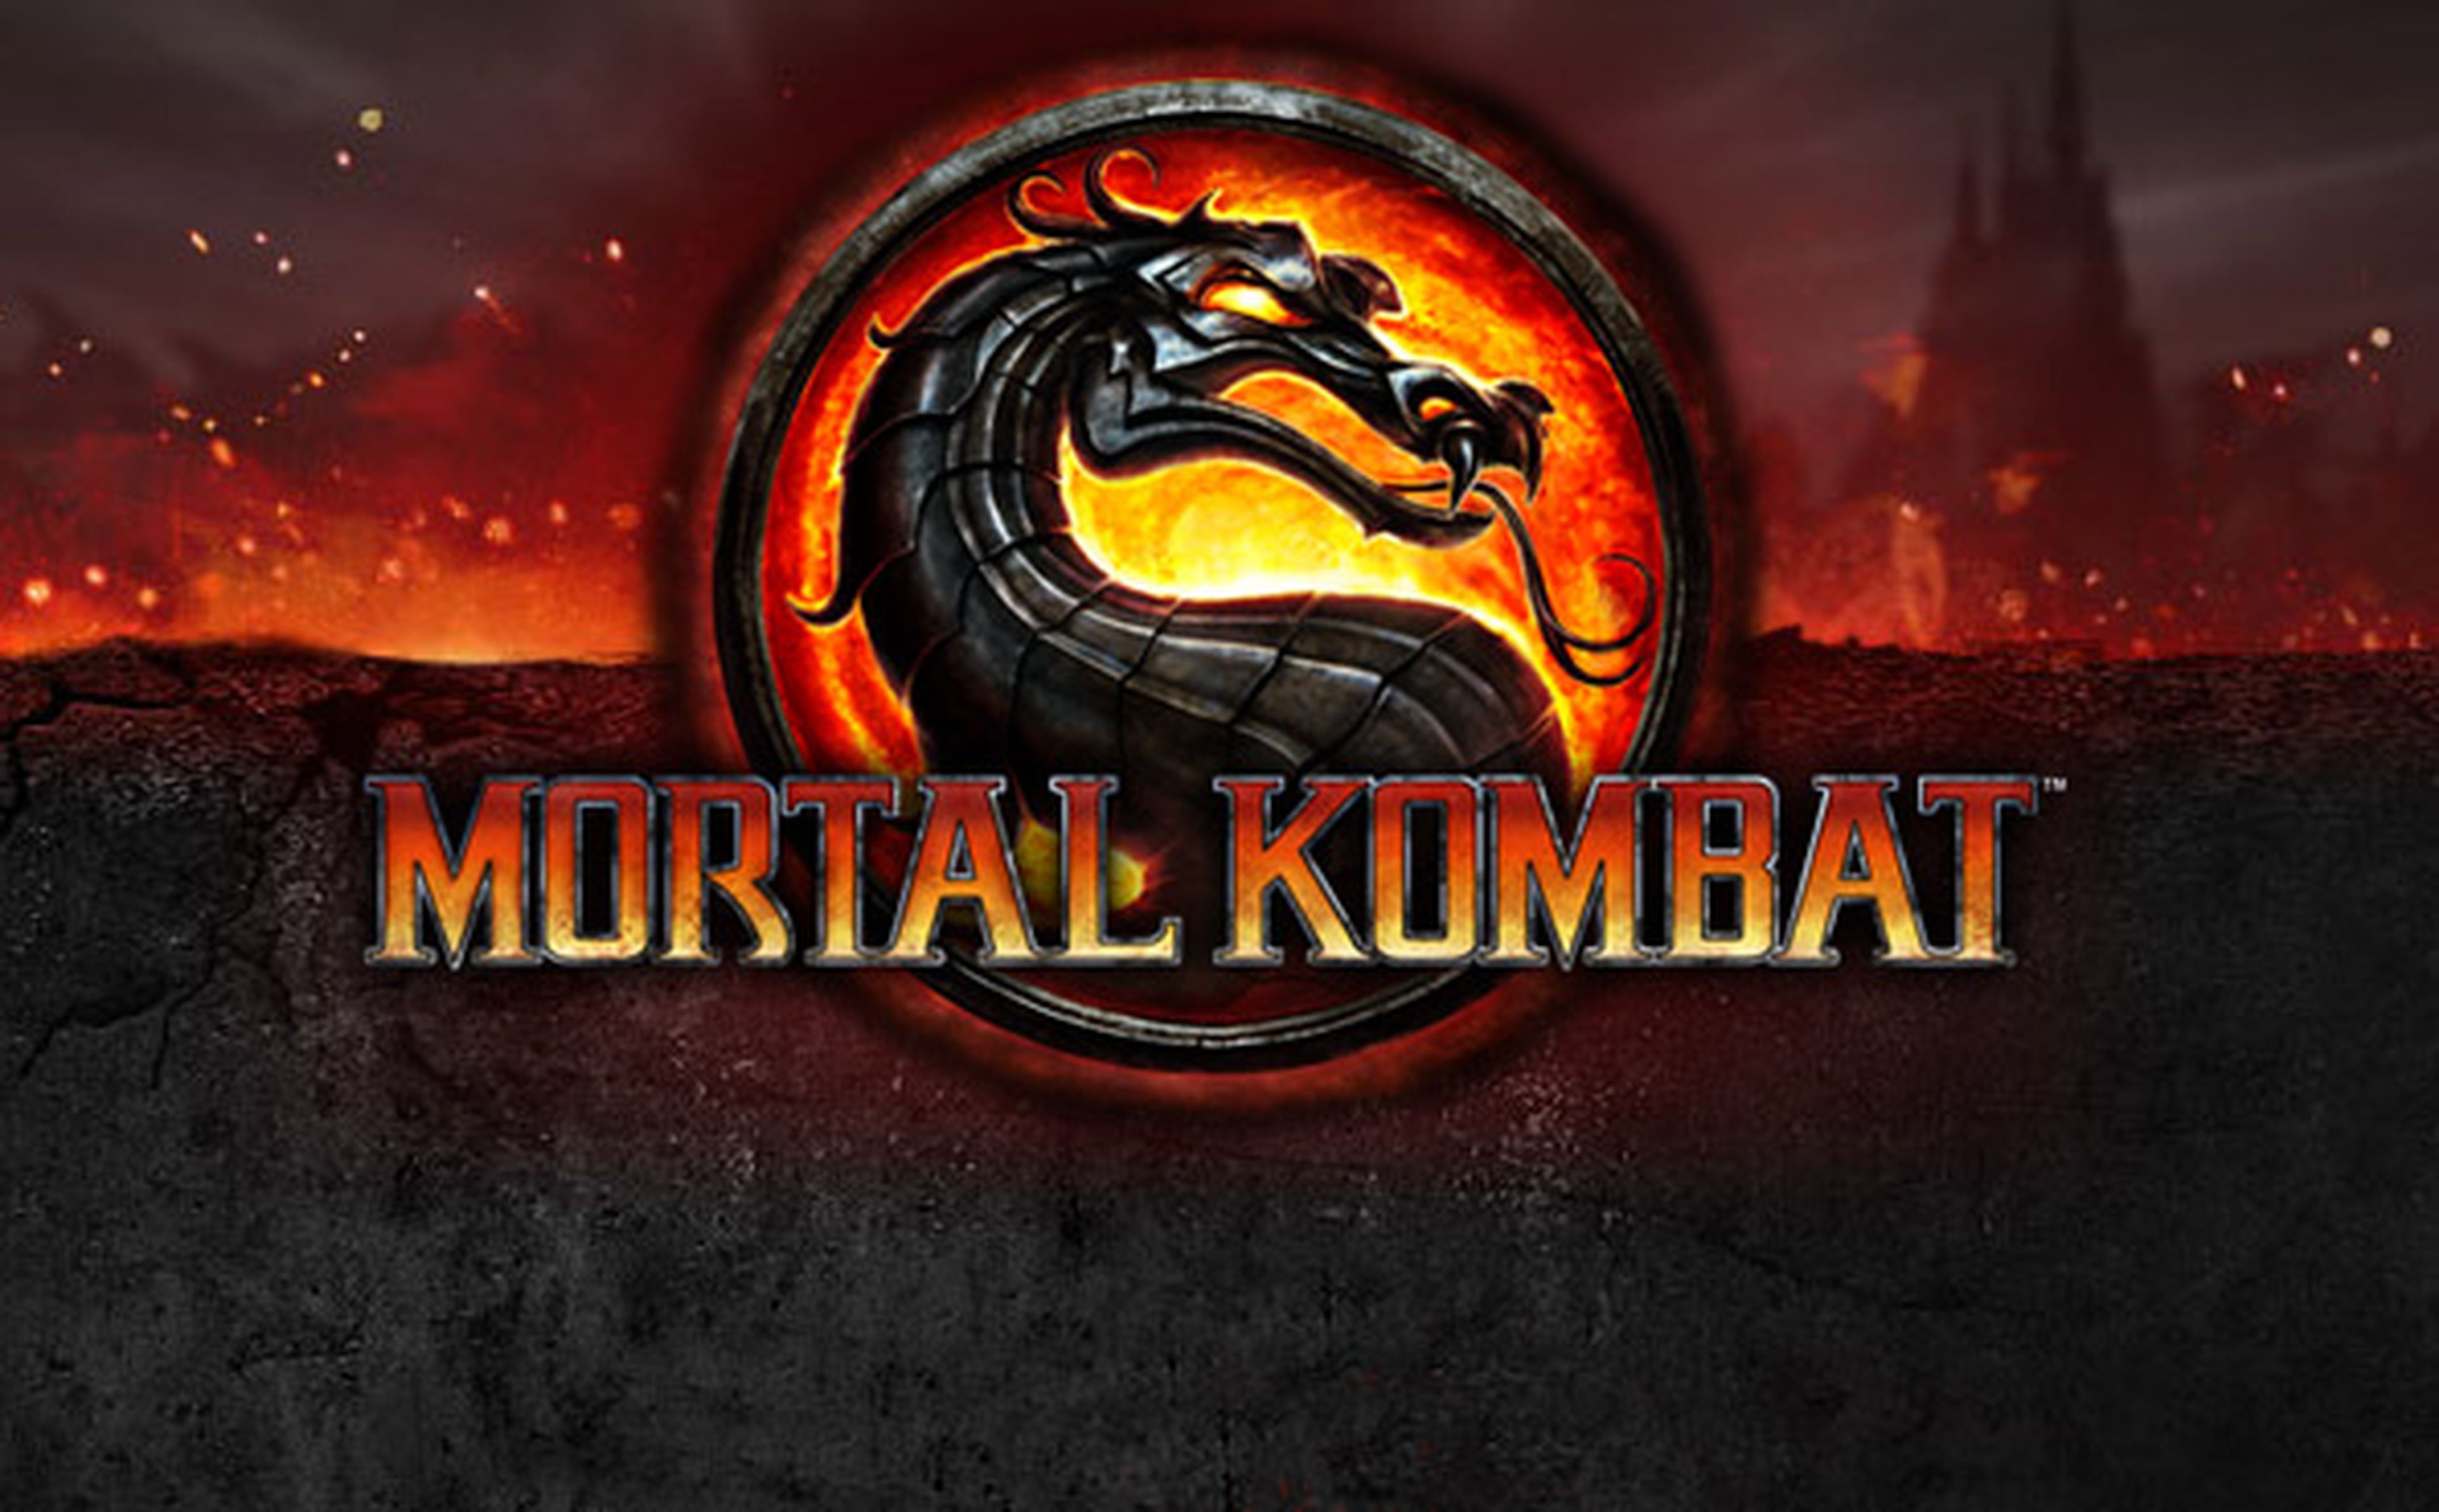 Demo de Mortal Kombat muy pronto